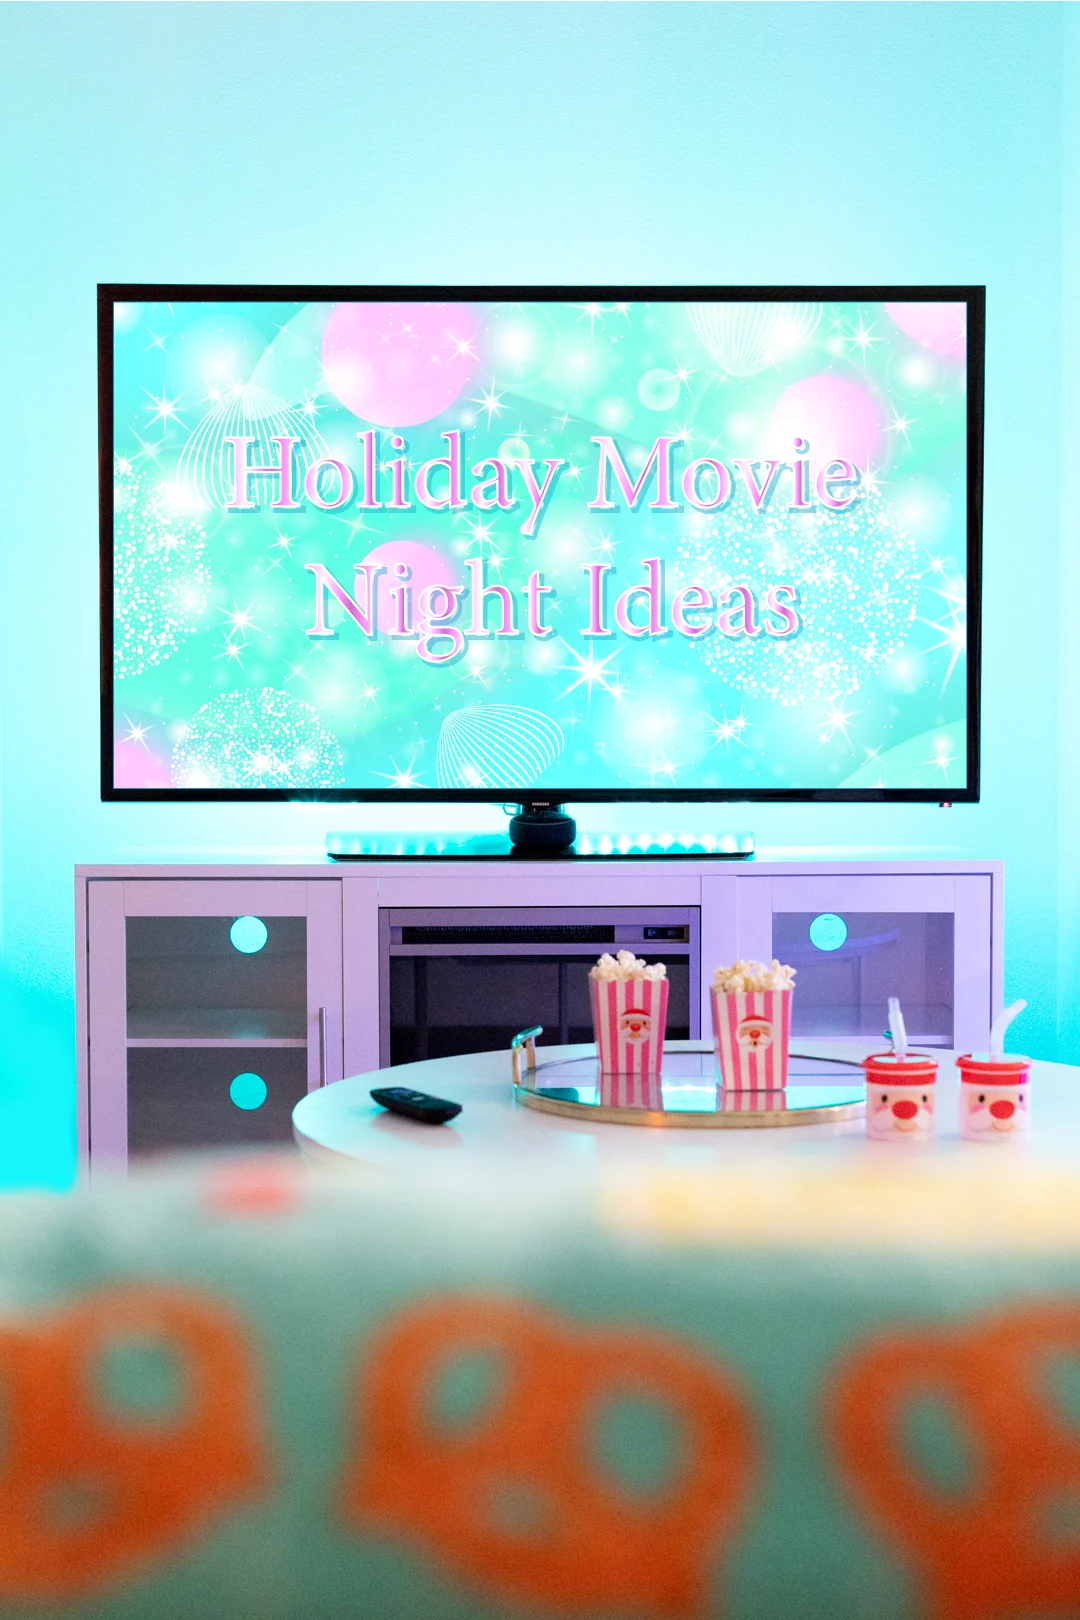 holiday movie night ideas with smart home lighting